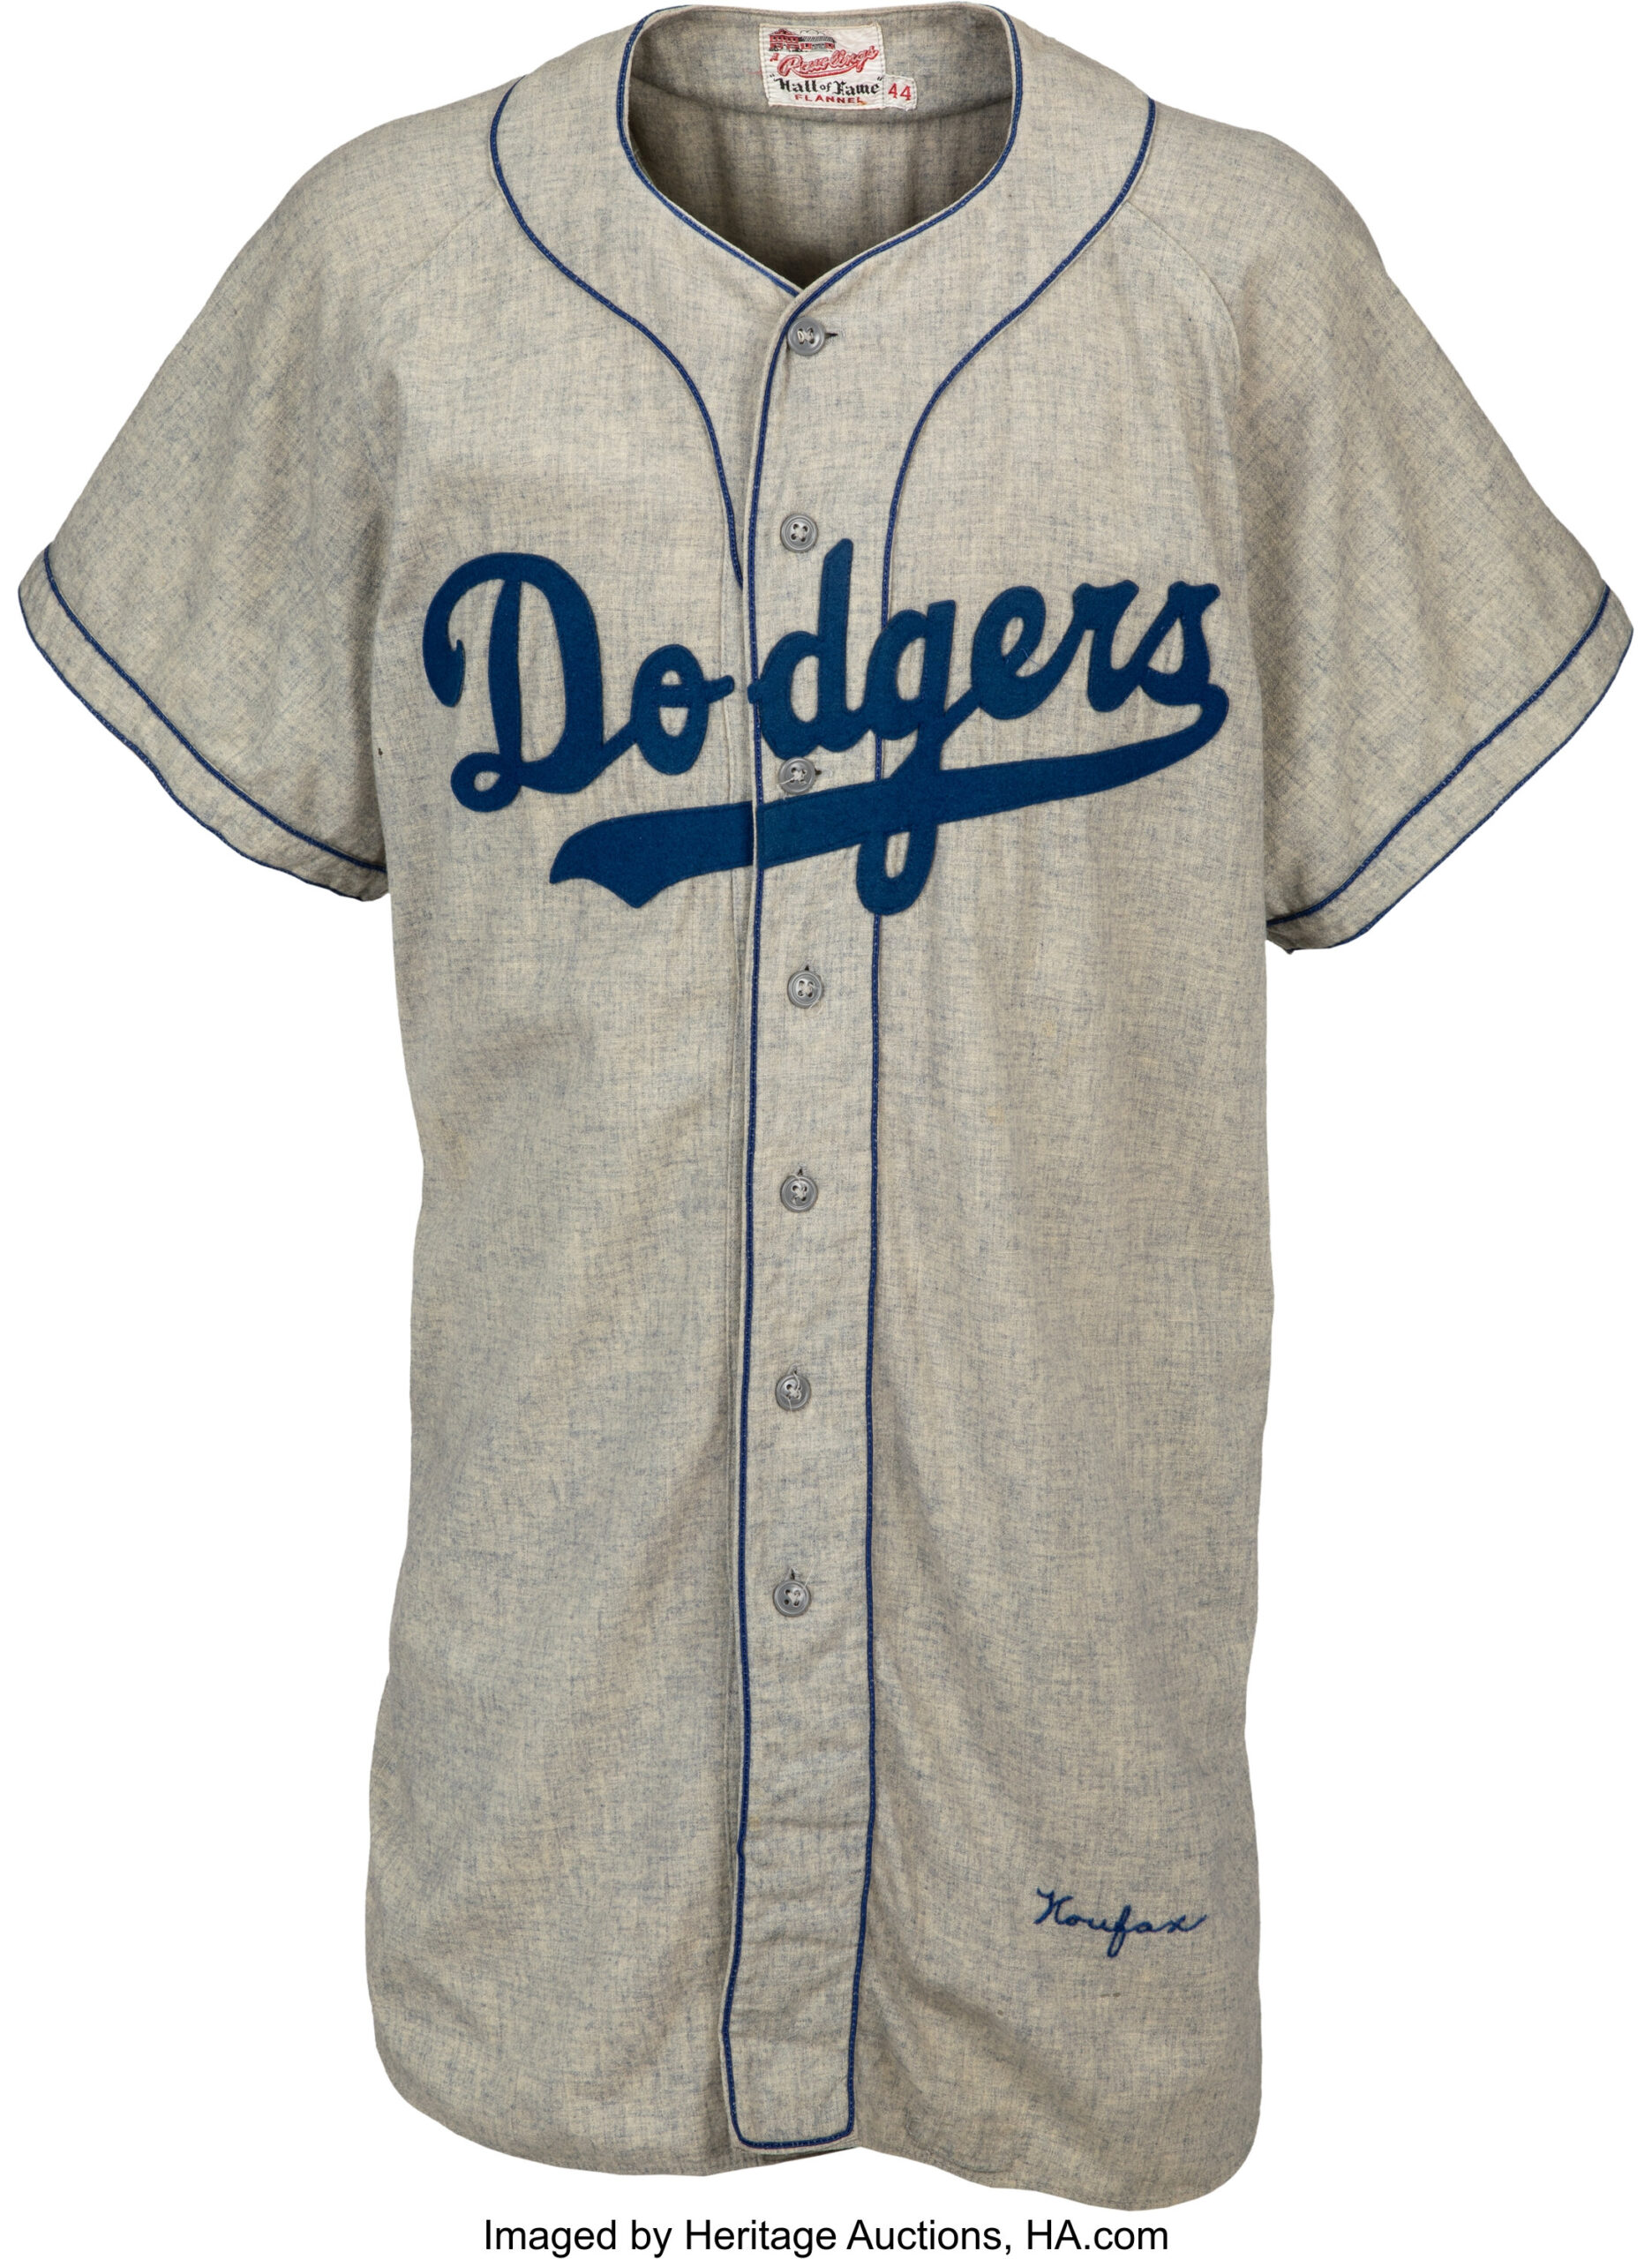 Game-worn Sandy Koufax rookie jersey from 1955